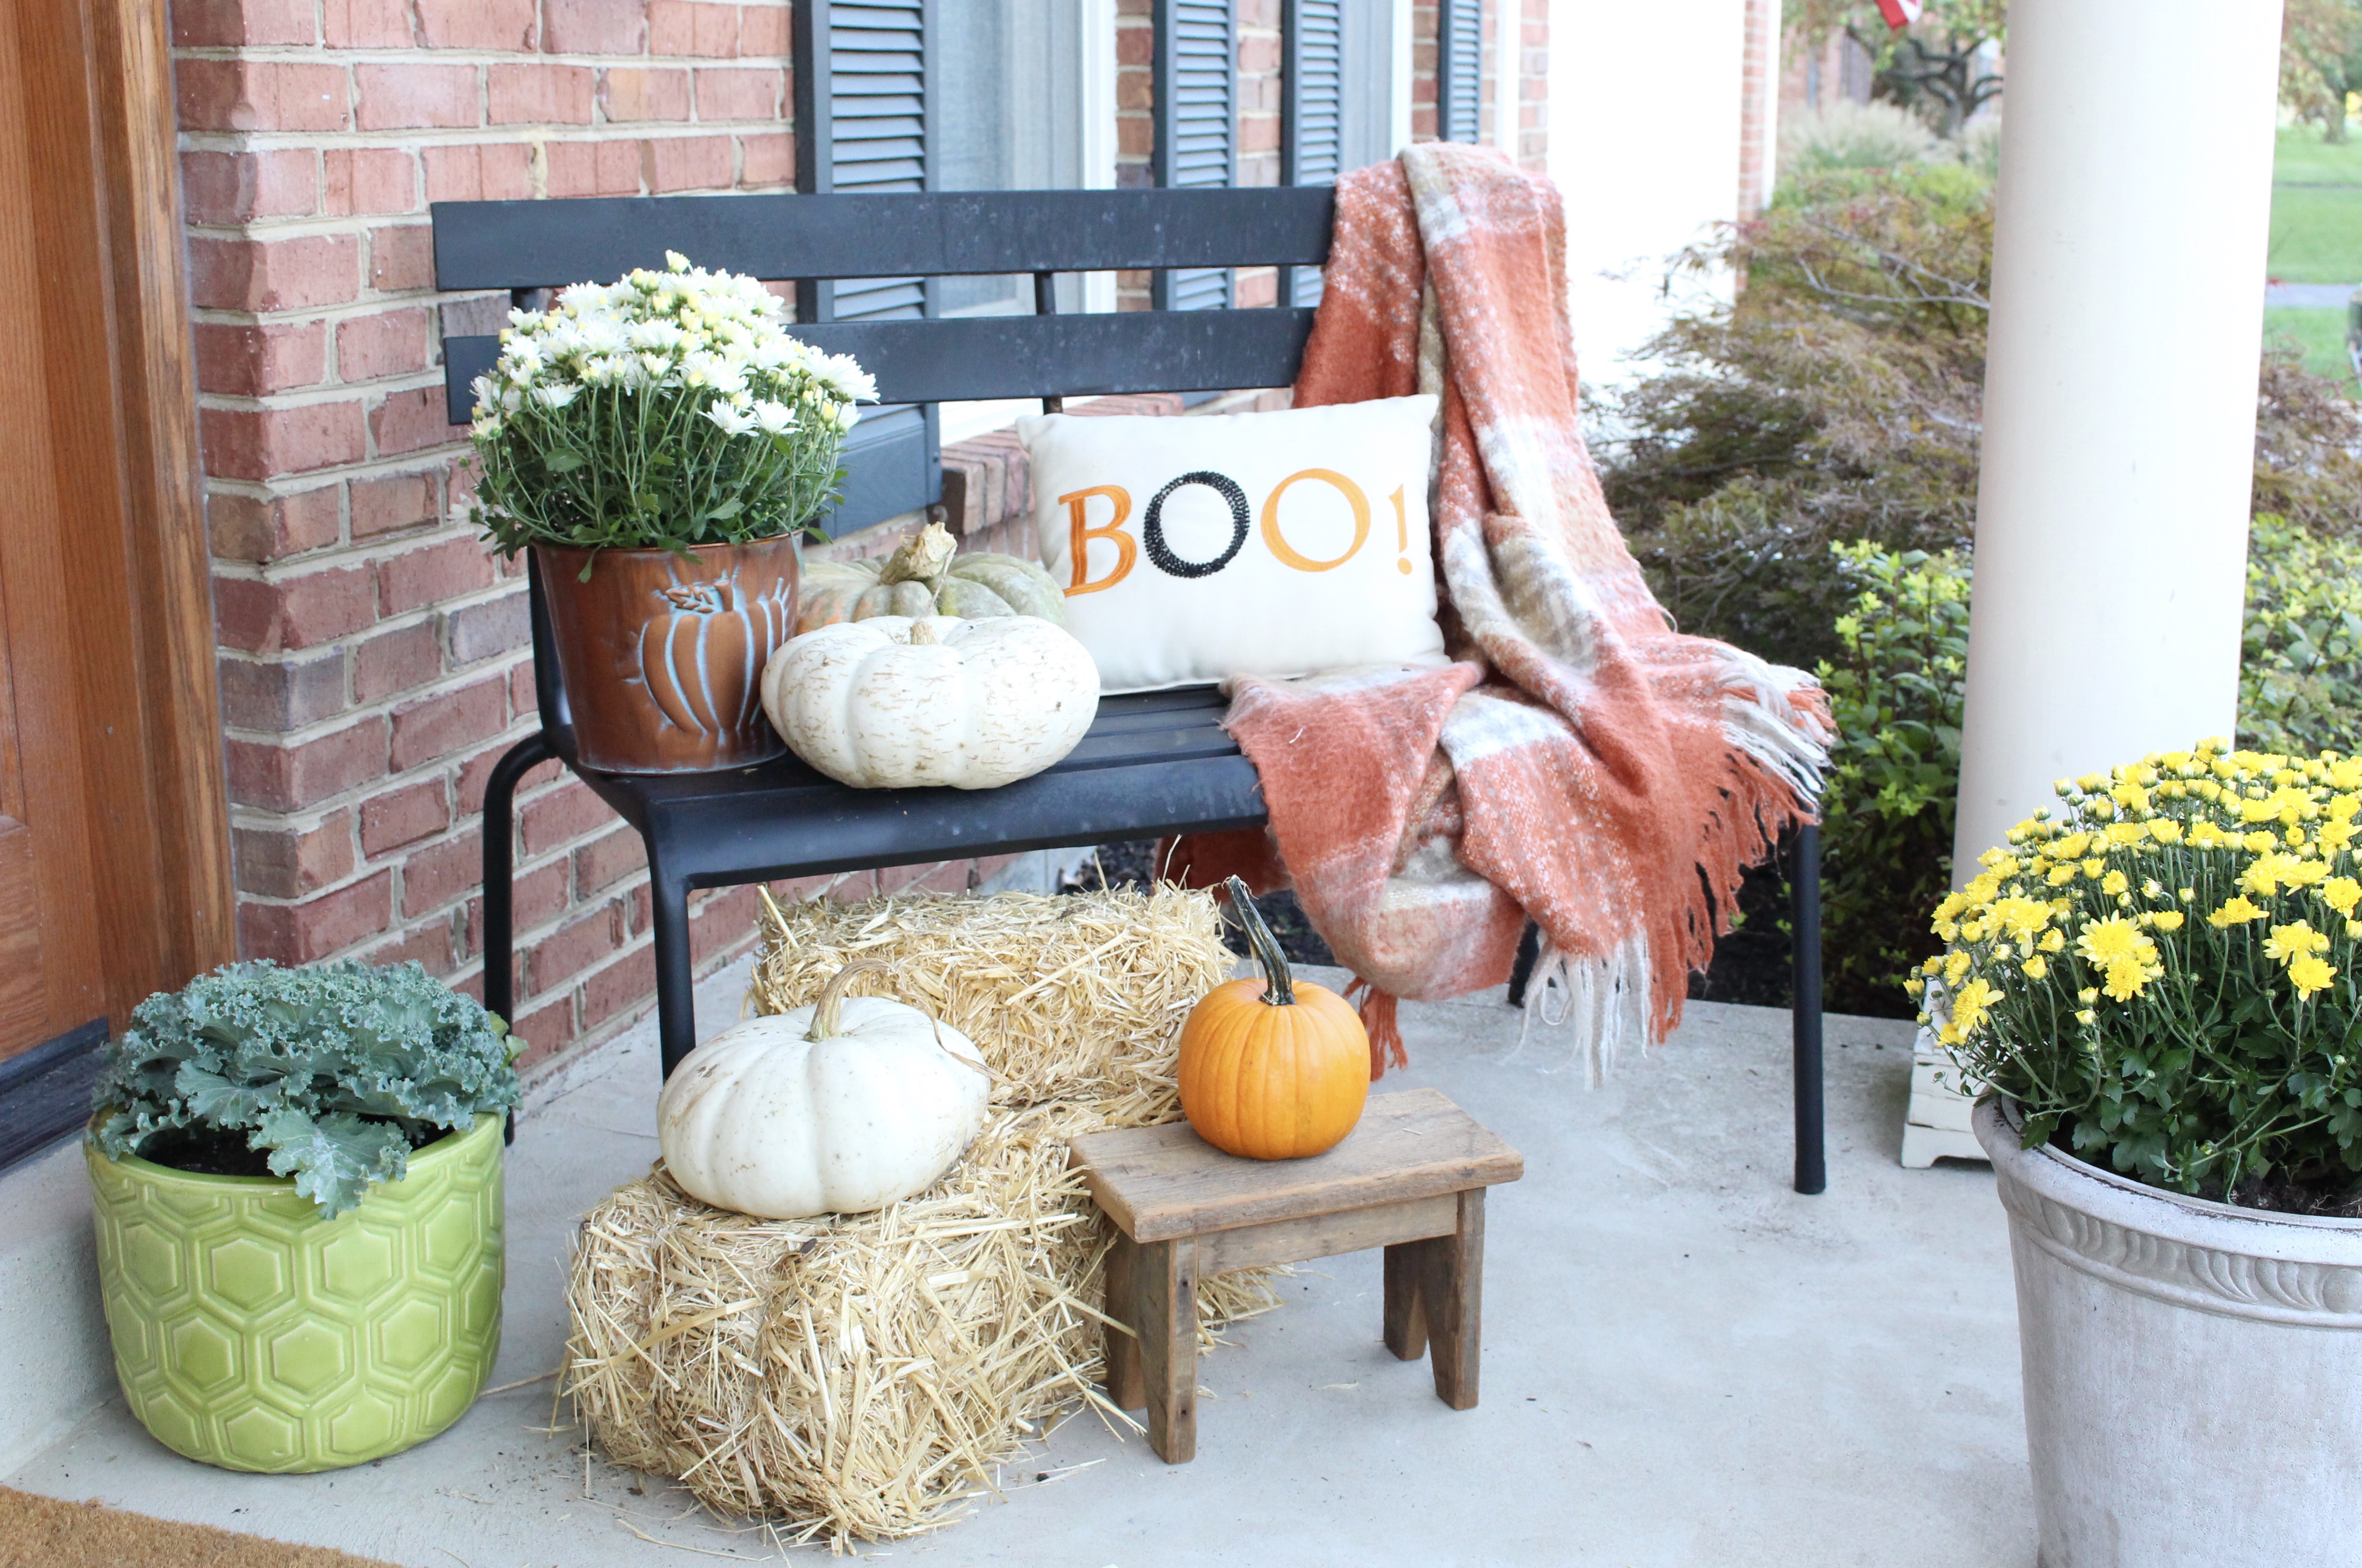 Fall Porch Ideas- Decorating for fall- Fall porch- Autumn- Outdoor decor- decorating outdoors for fall- porch- seasonal outdoor decor- pumpkins- mums- Halloween front porch